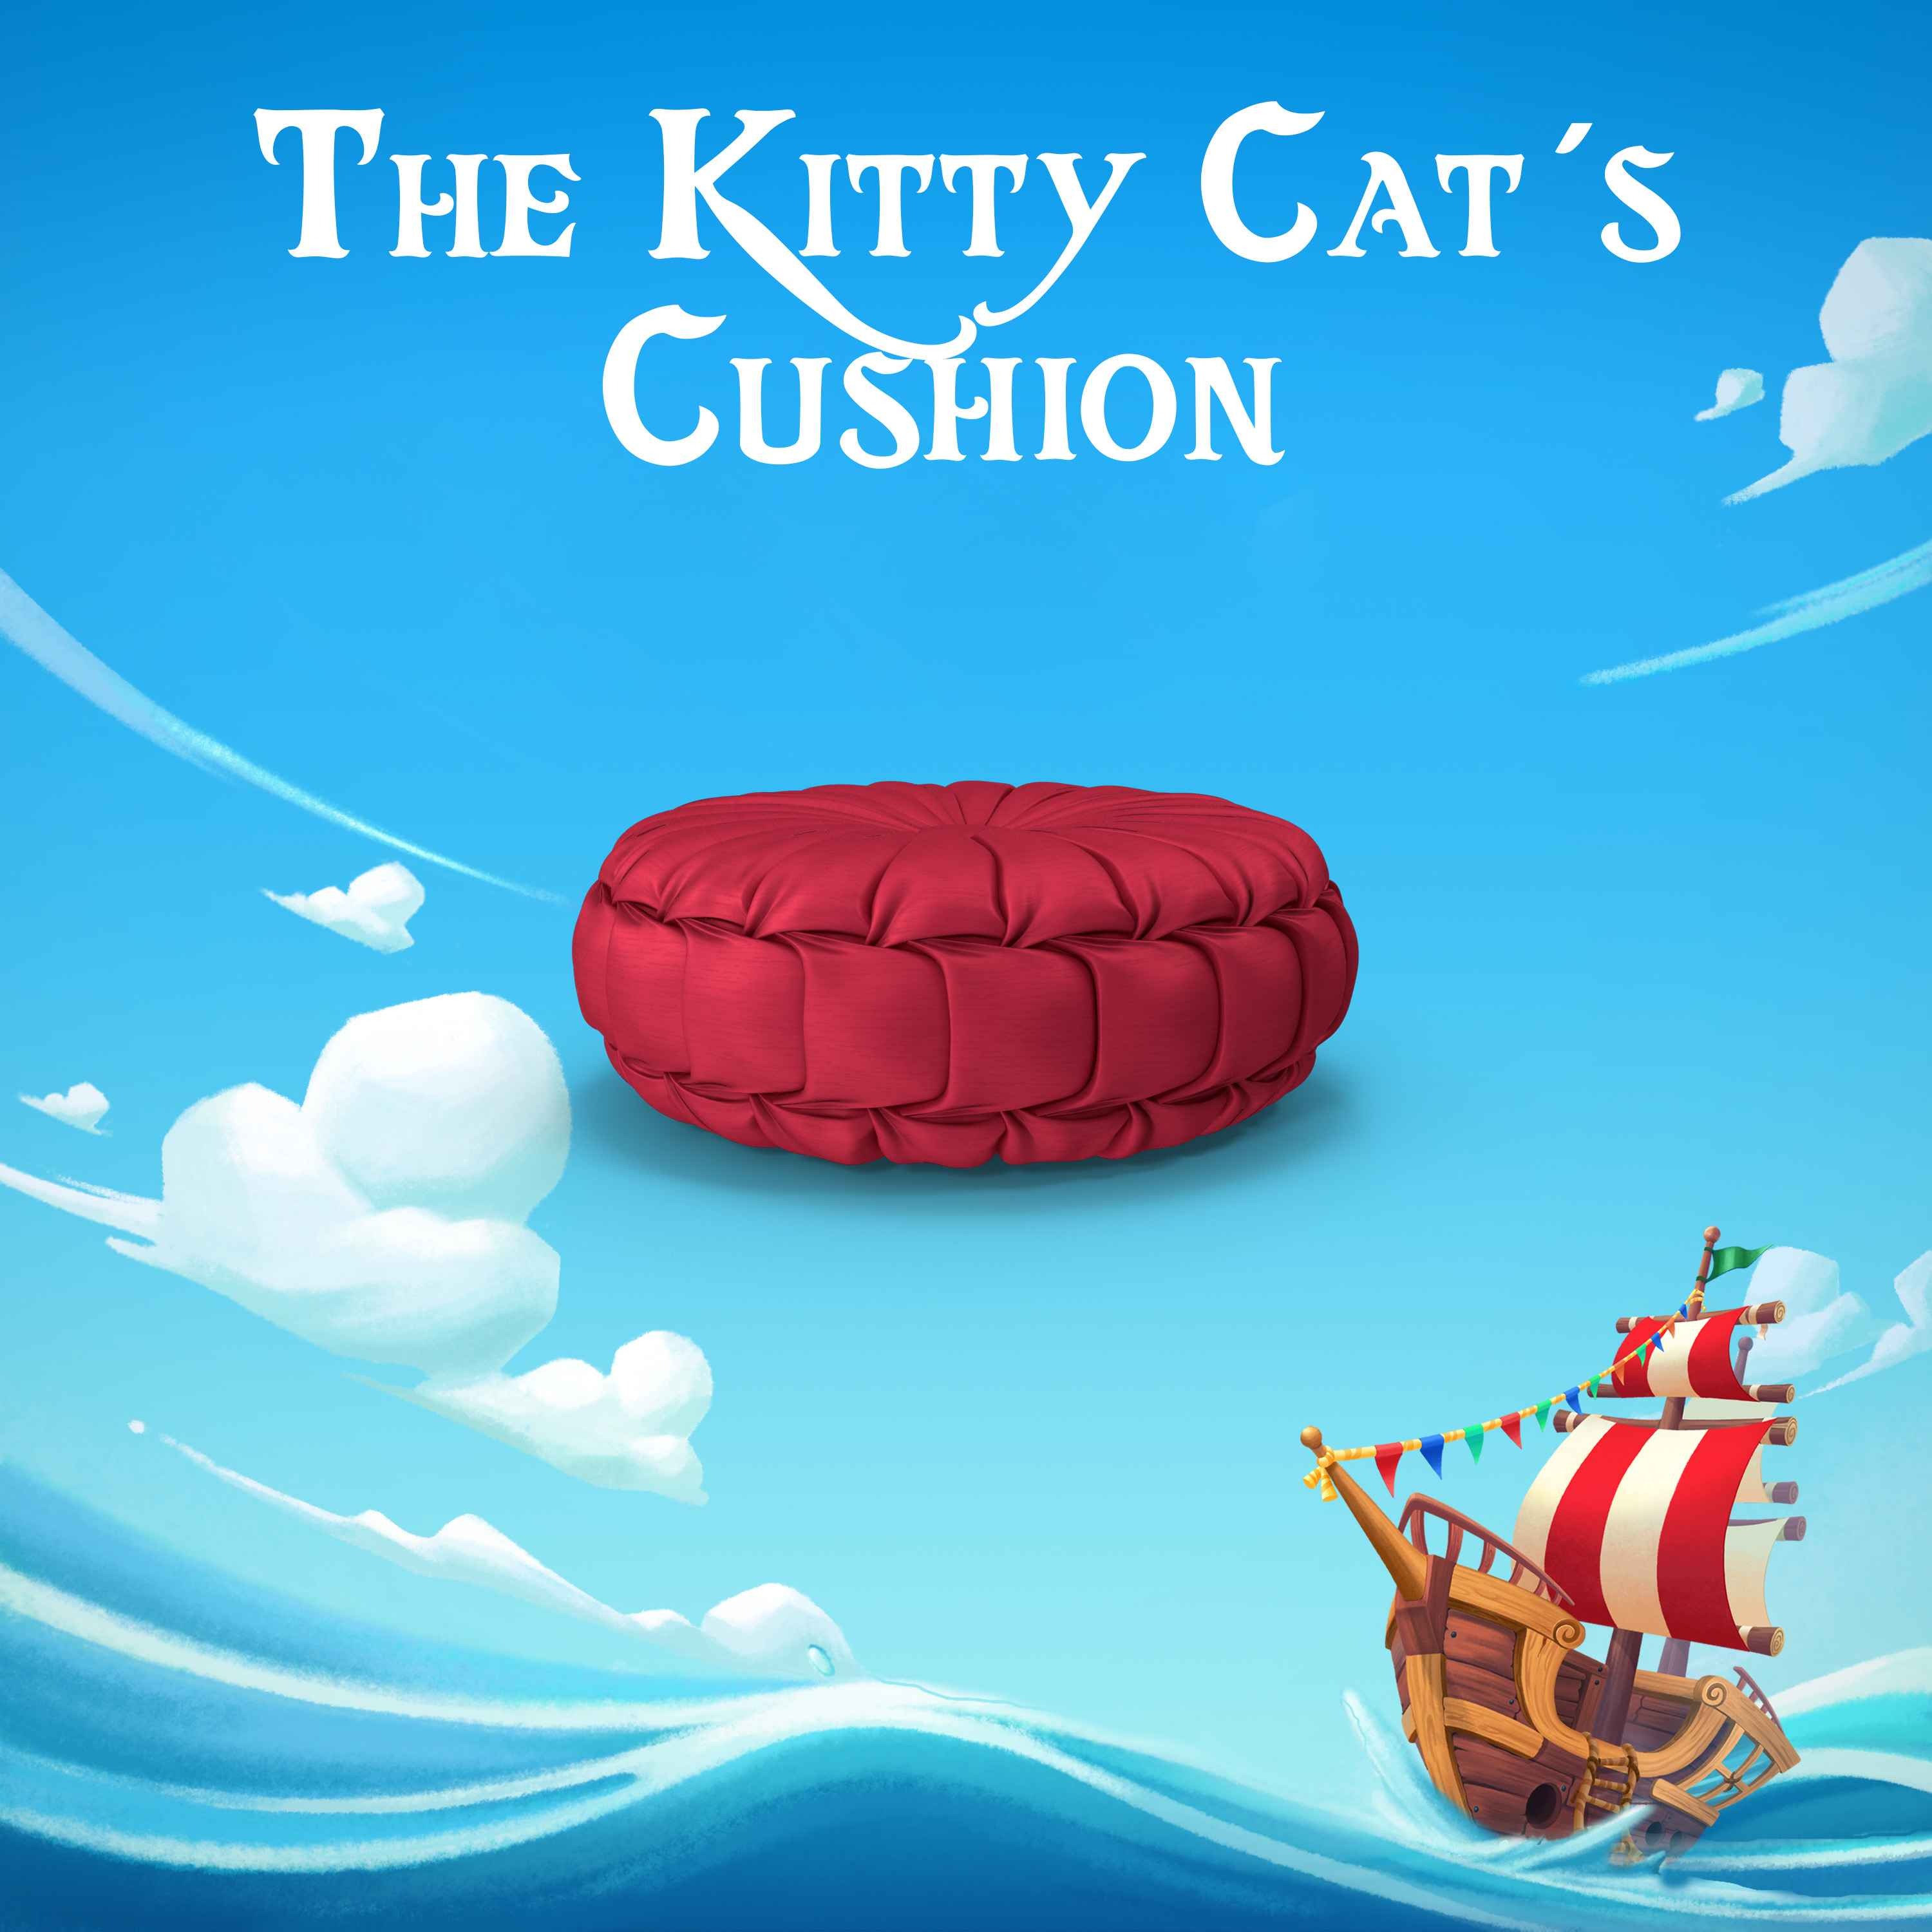 The Kitty Cat's Cushion